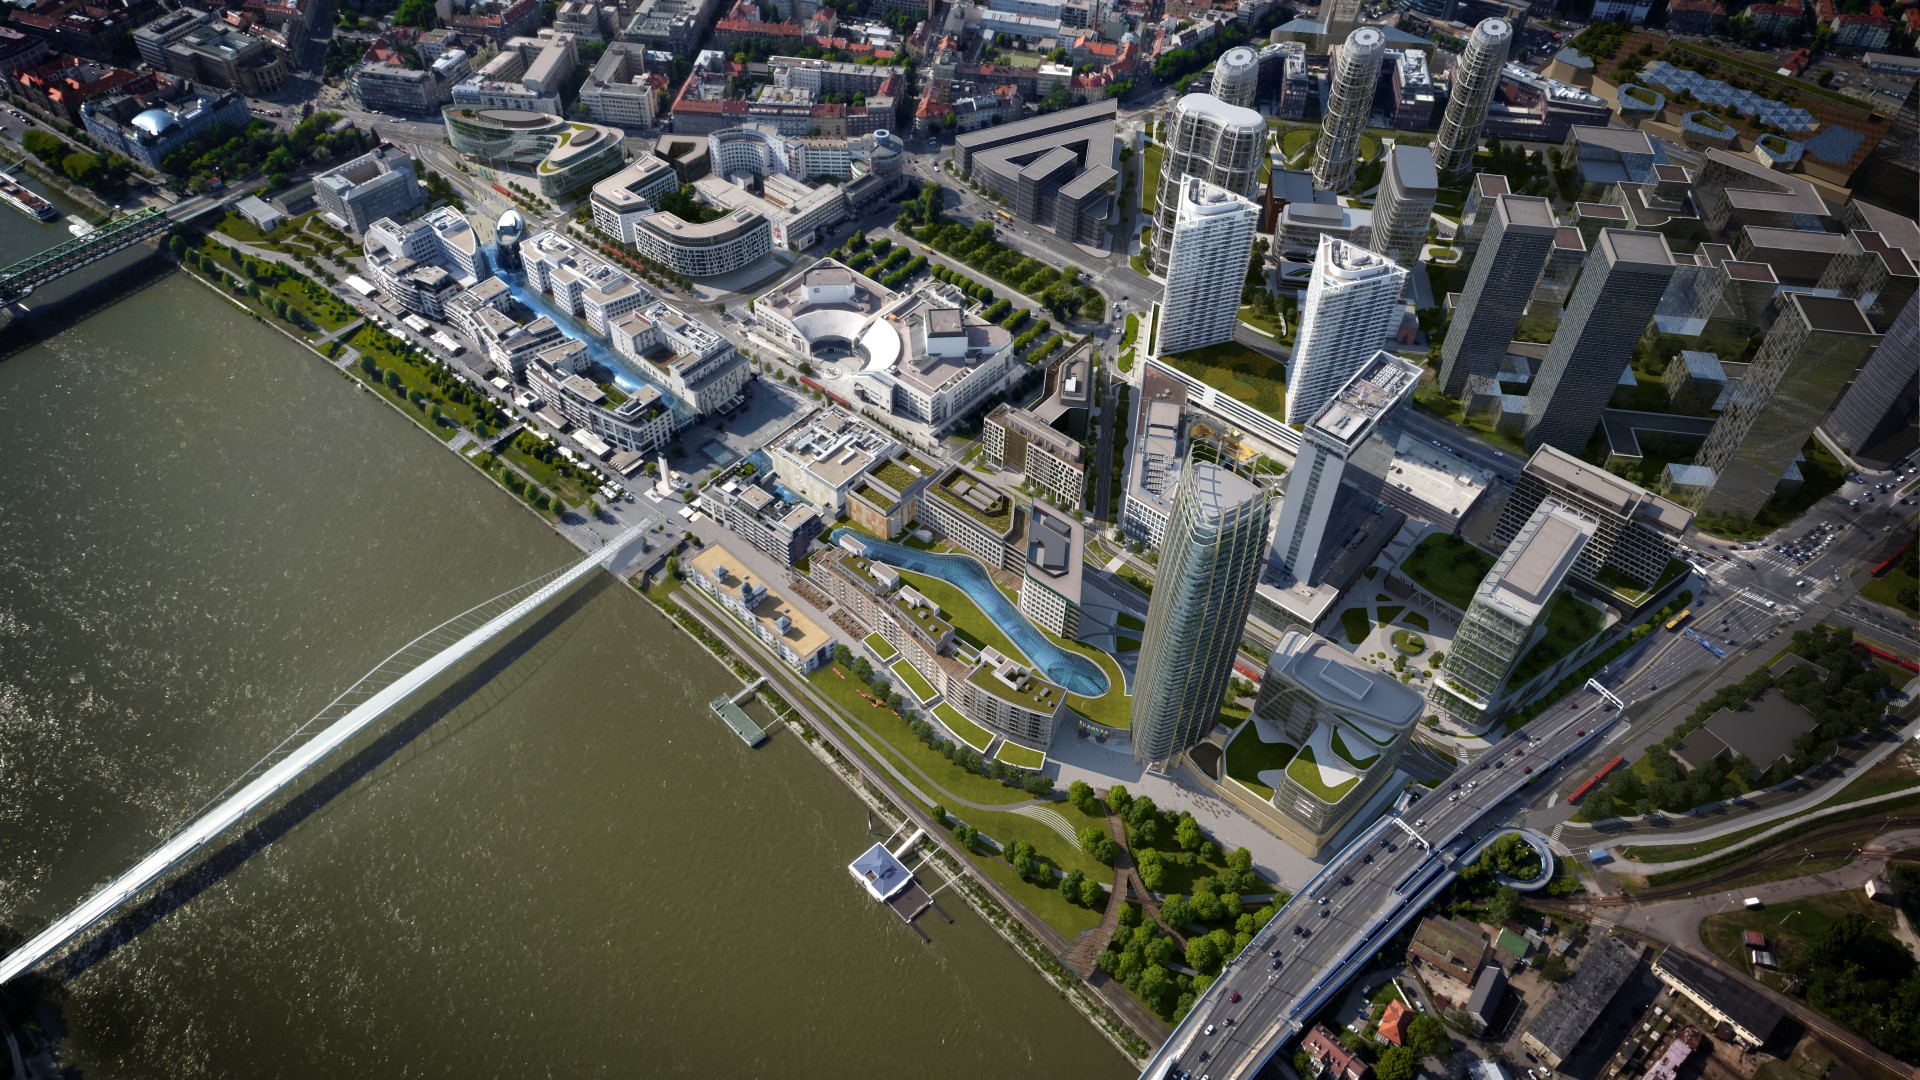 Most bude spajat brehy Dunaja promenadou